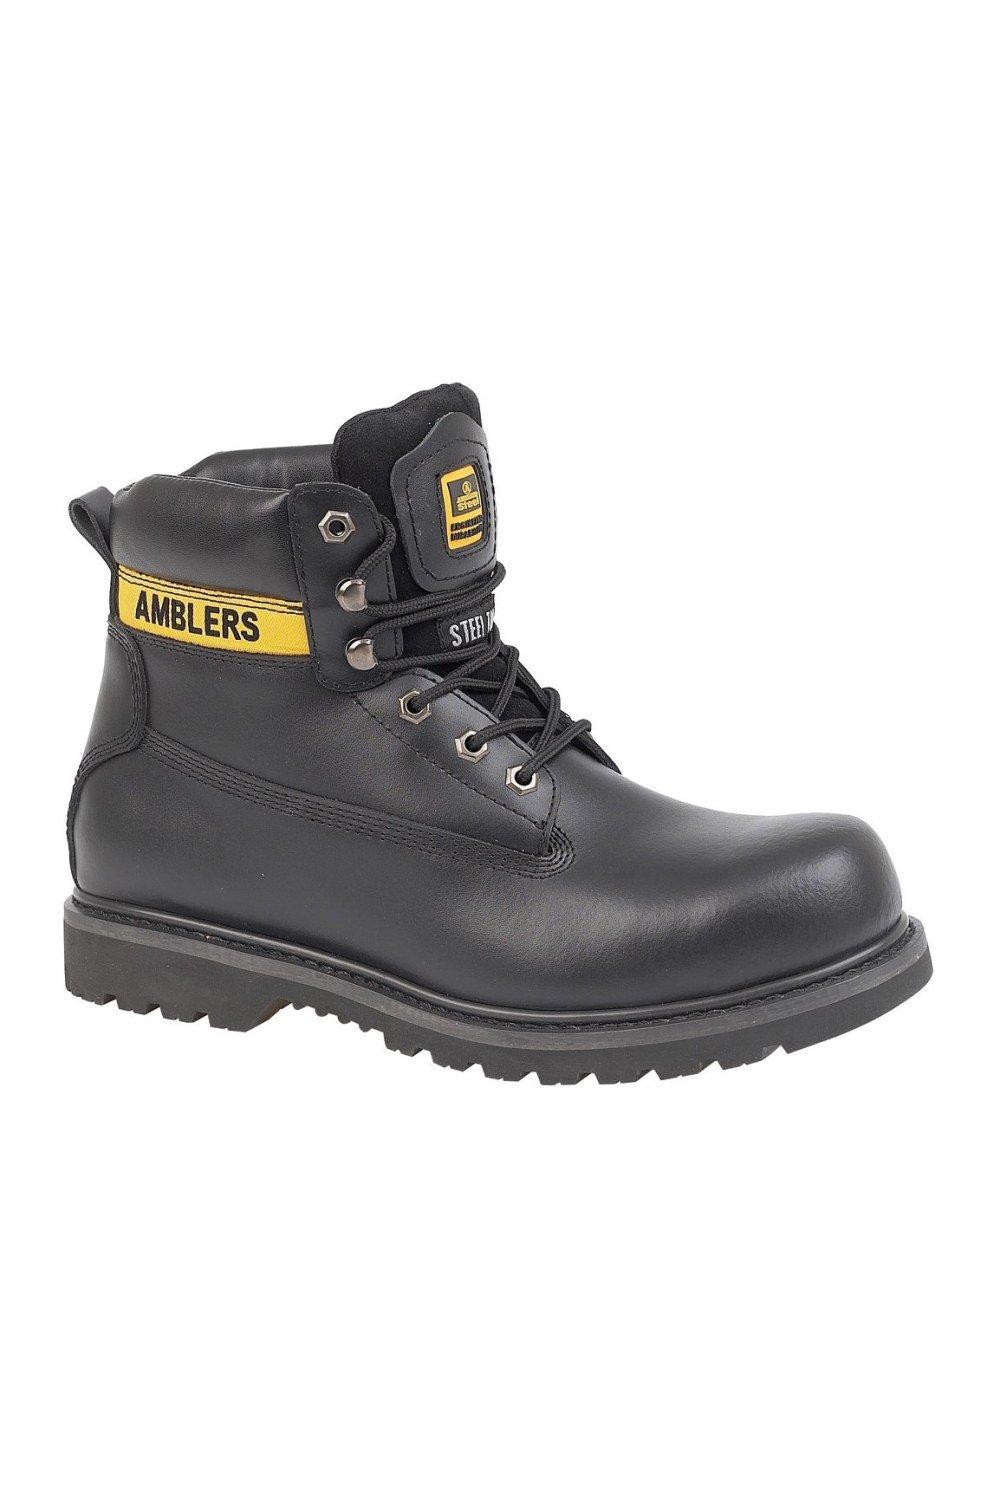 Steel FS9 Steel Toe Cap Safety Boot Boots